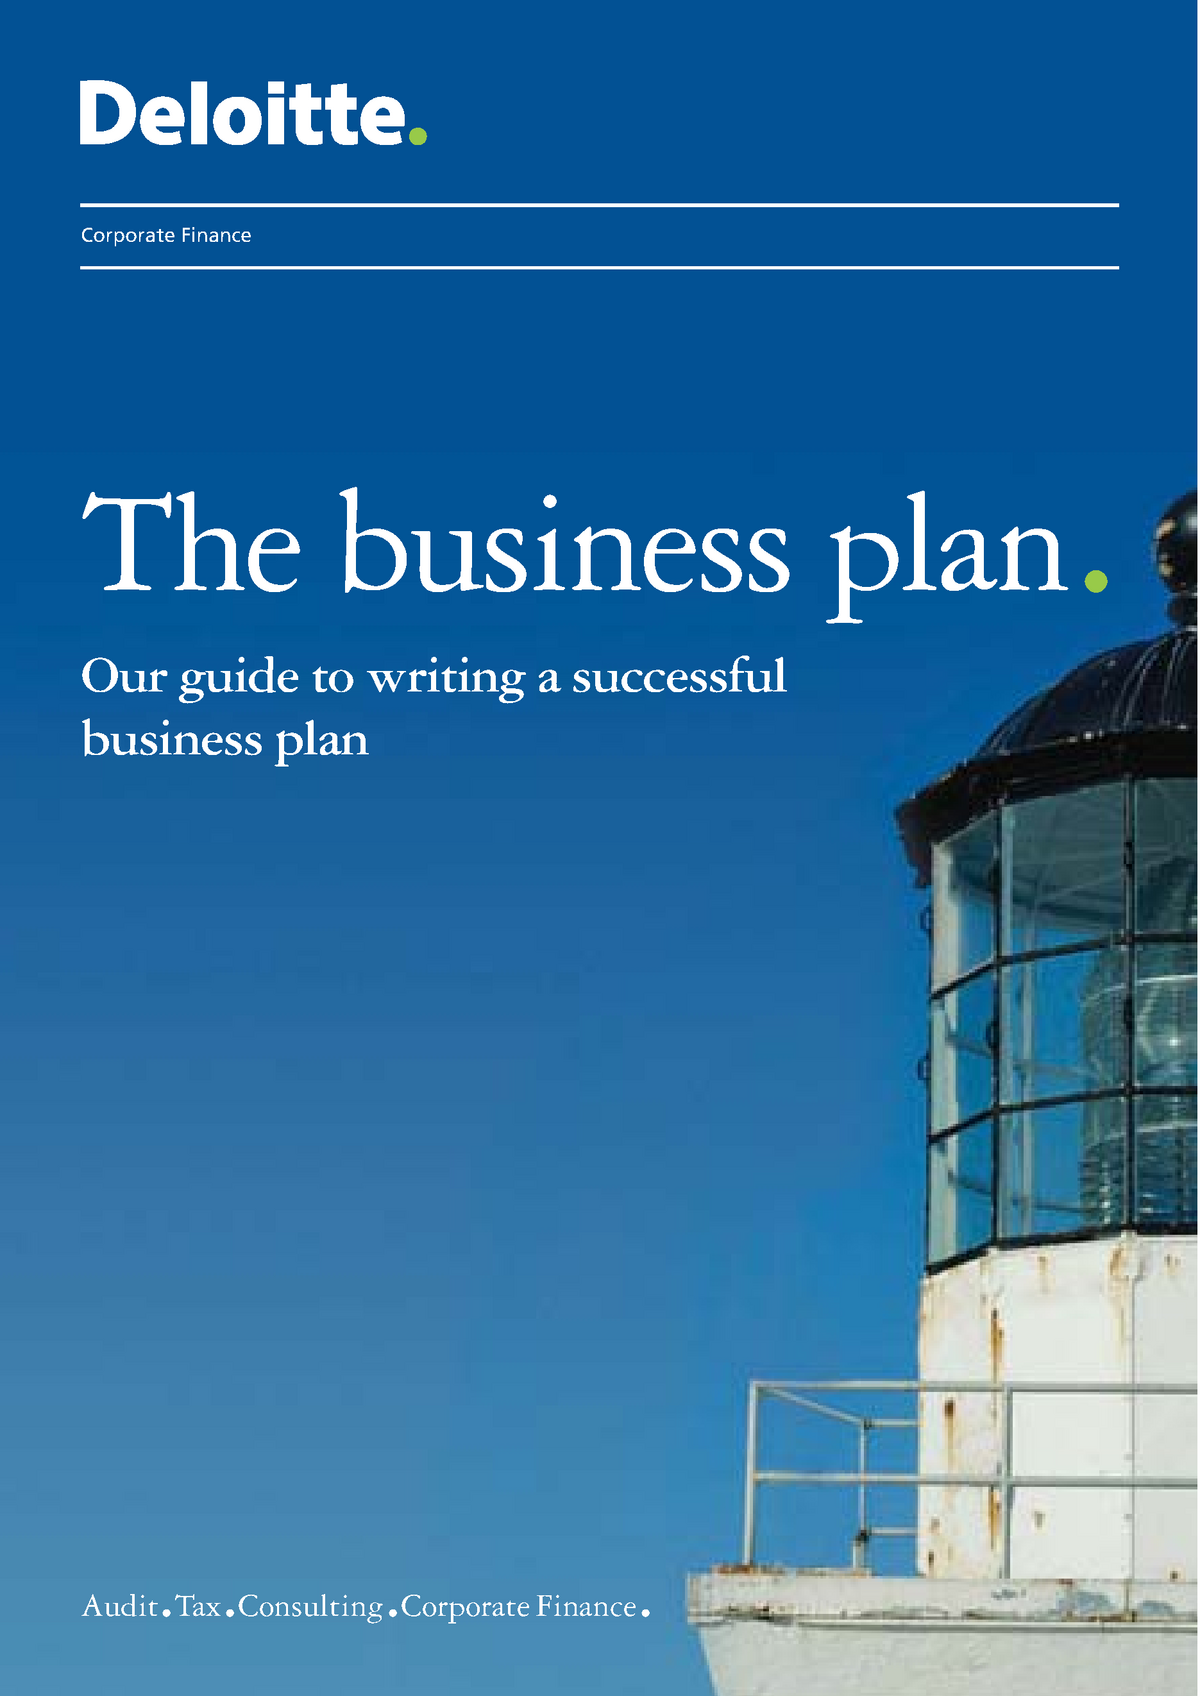 business plan deloitte pdf